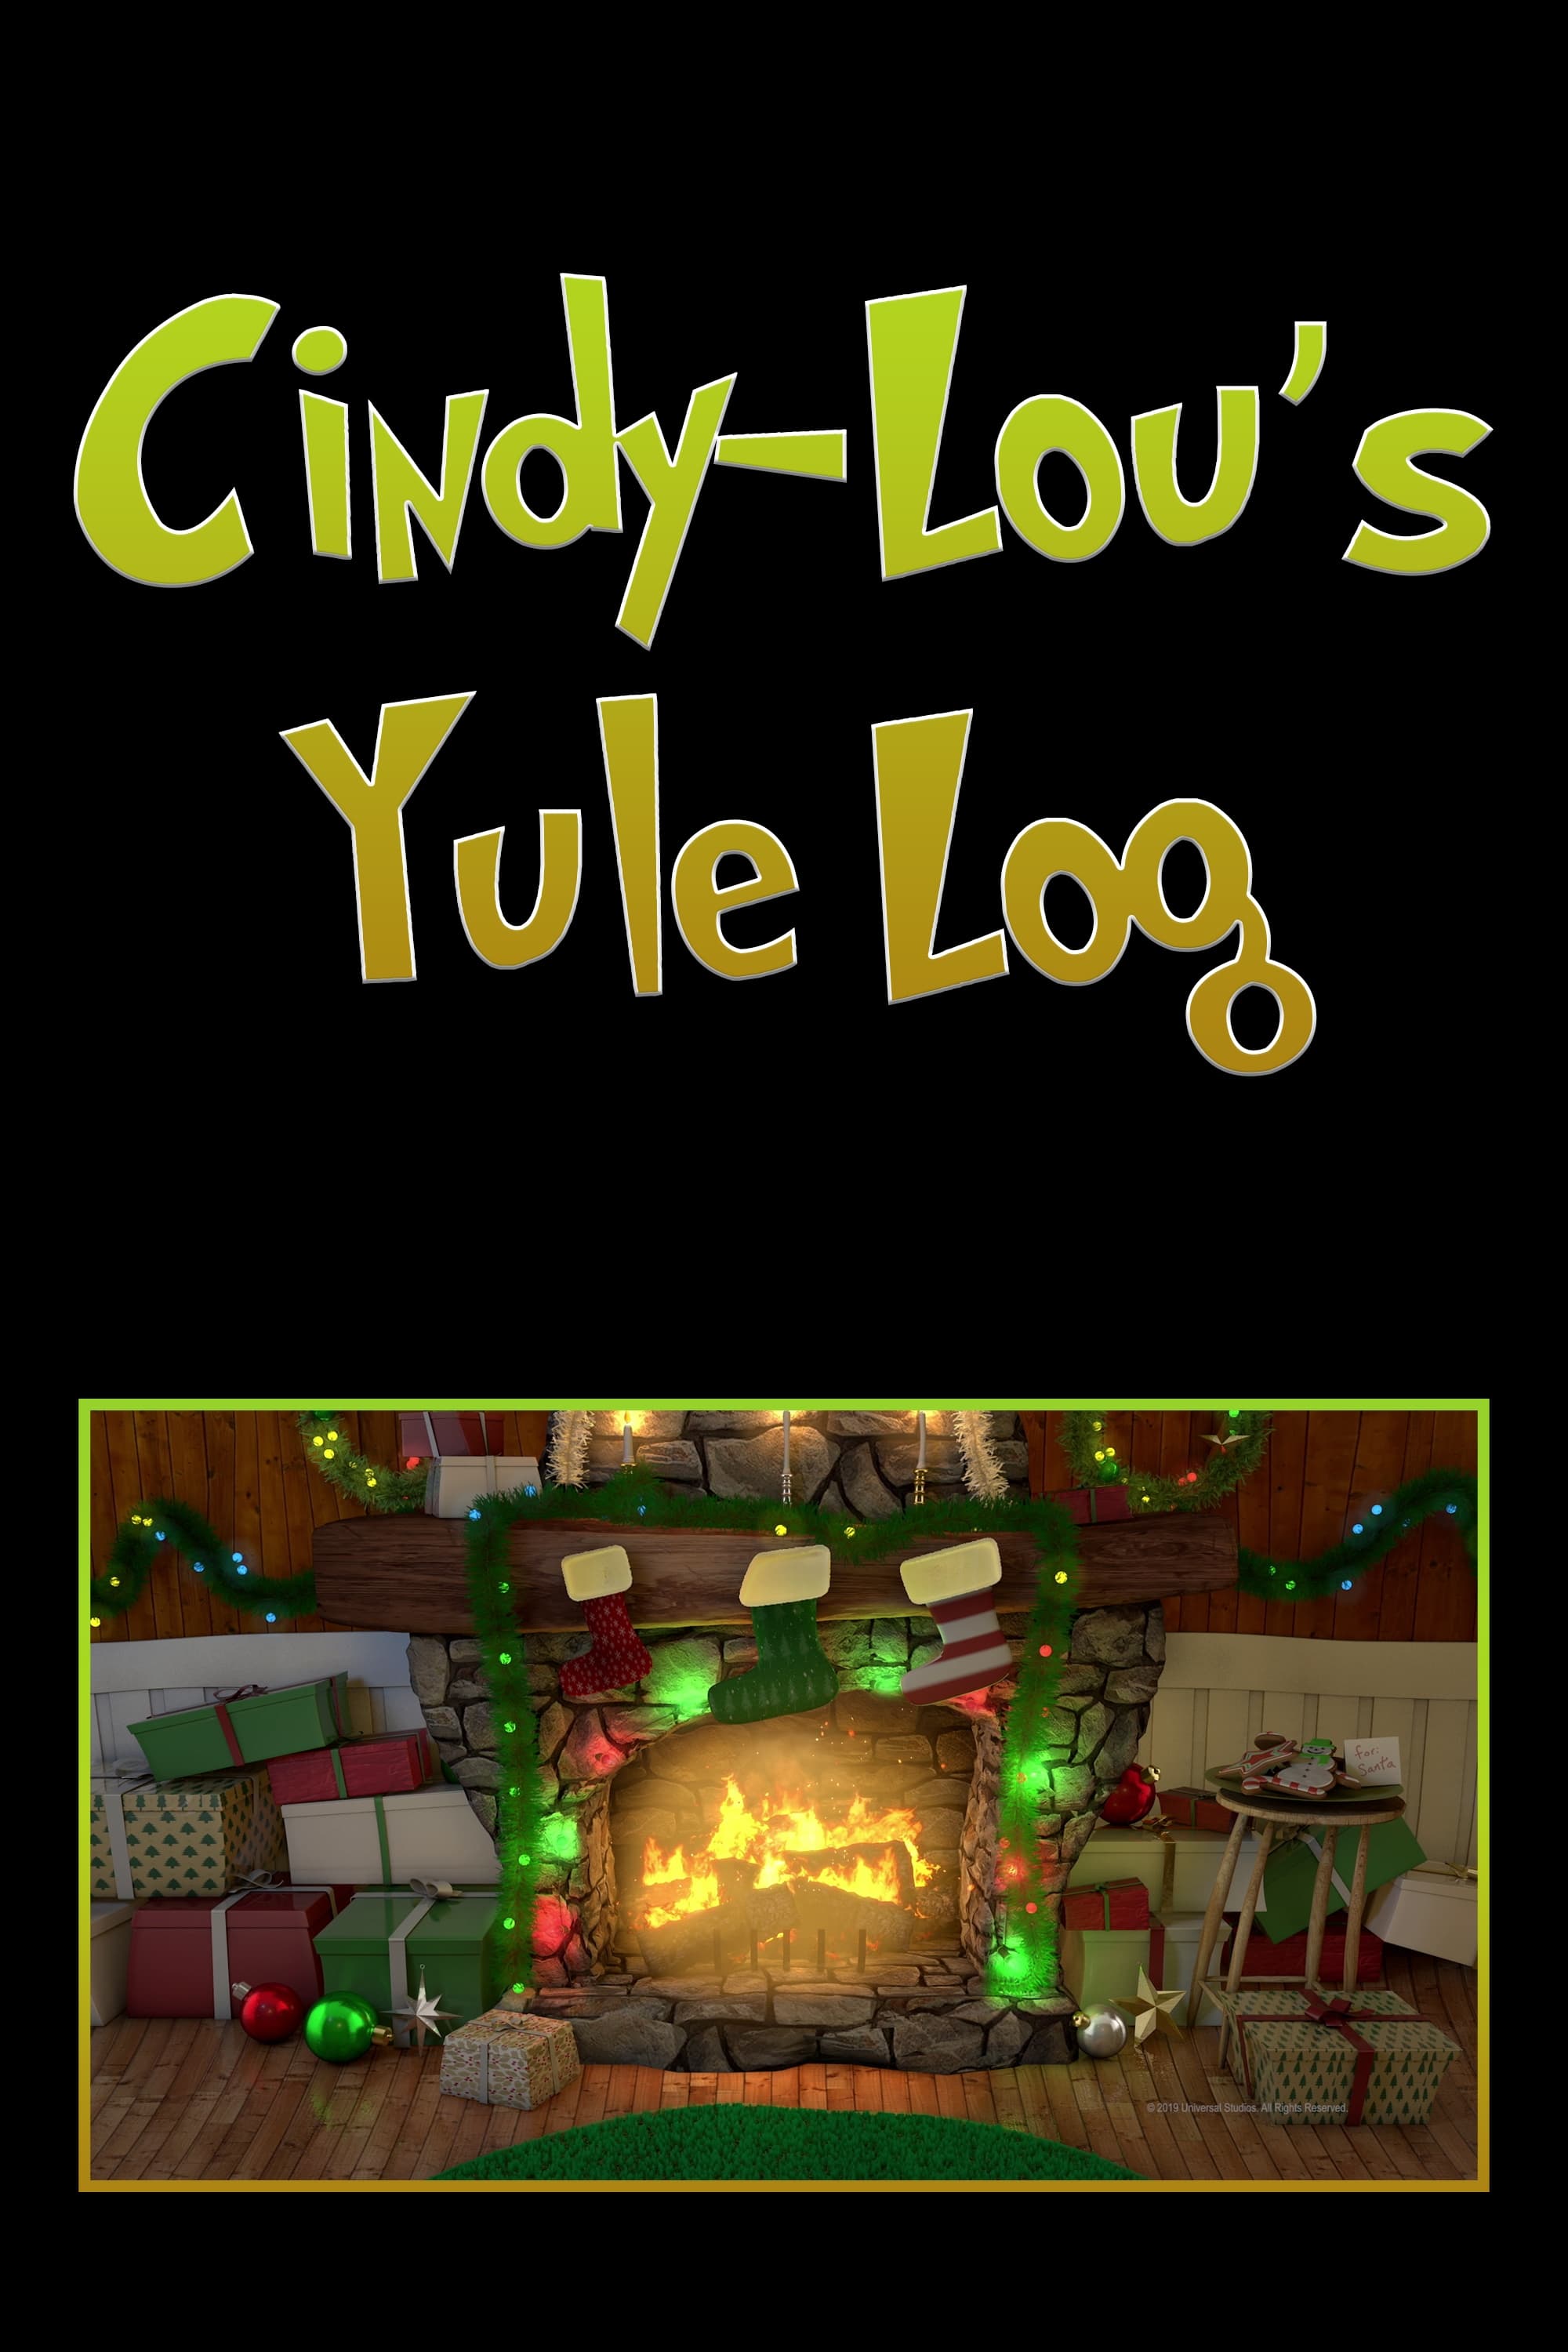 Cindy-Lou's Yule Log